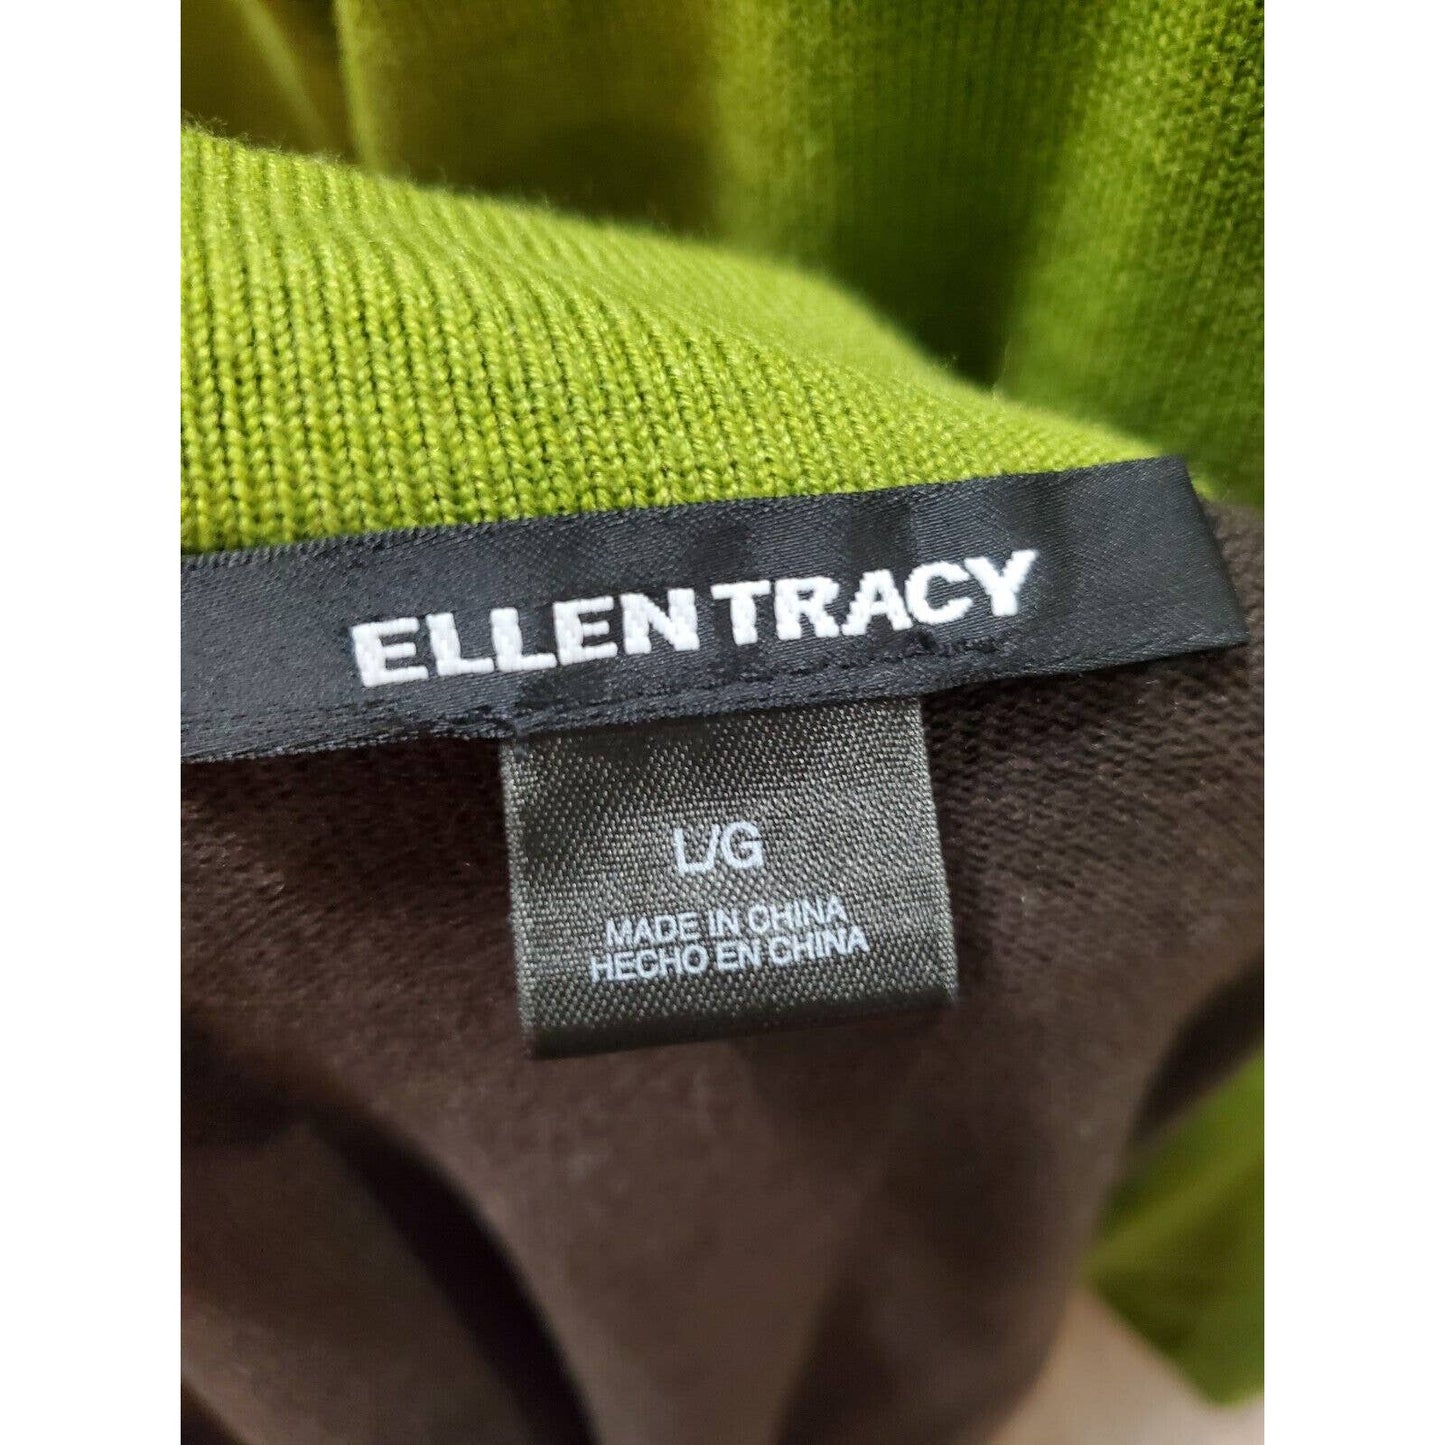 Ellen Tracy Women's Cotton Short Sleeve Top & Cardigan Sweater 2 Pc's Set Large